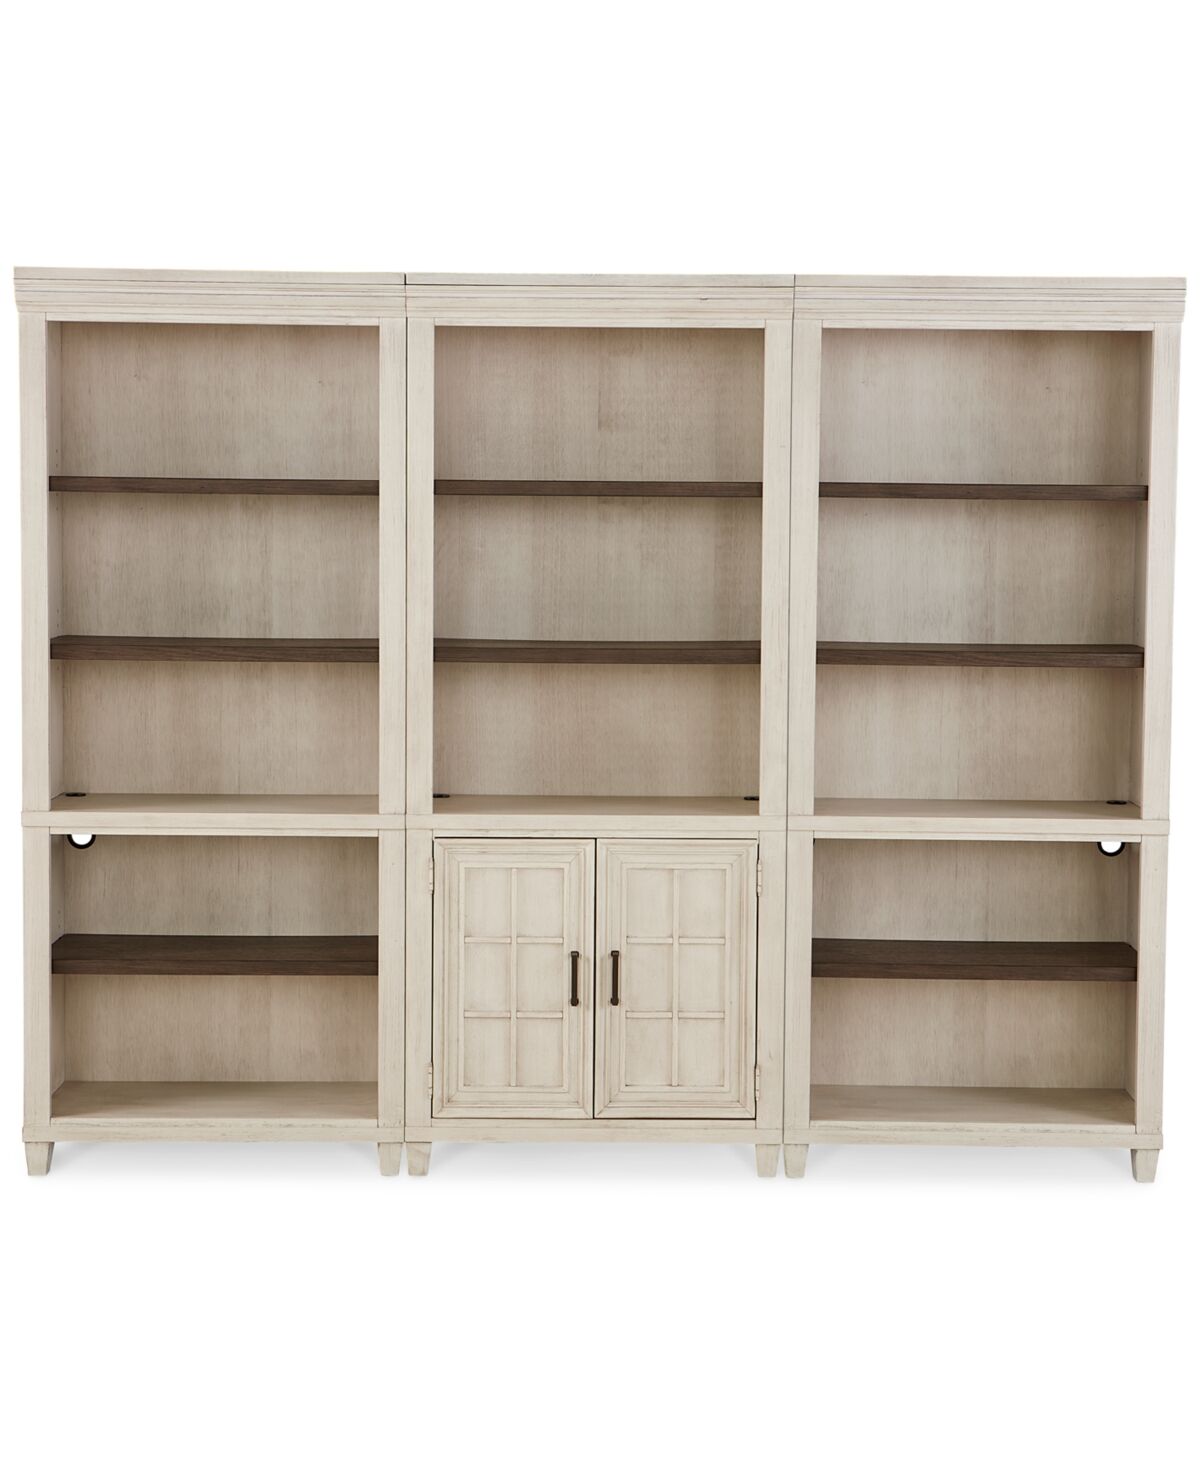 Furniture Dawnwood Home Office 3- Pc. Set (Open Bookcase, Open Bookcase, Door Bookcase) - Aged Ivory